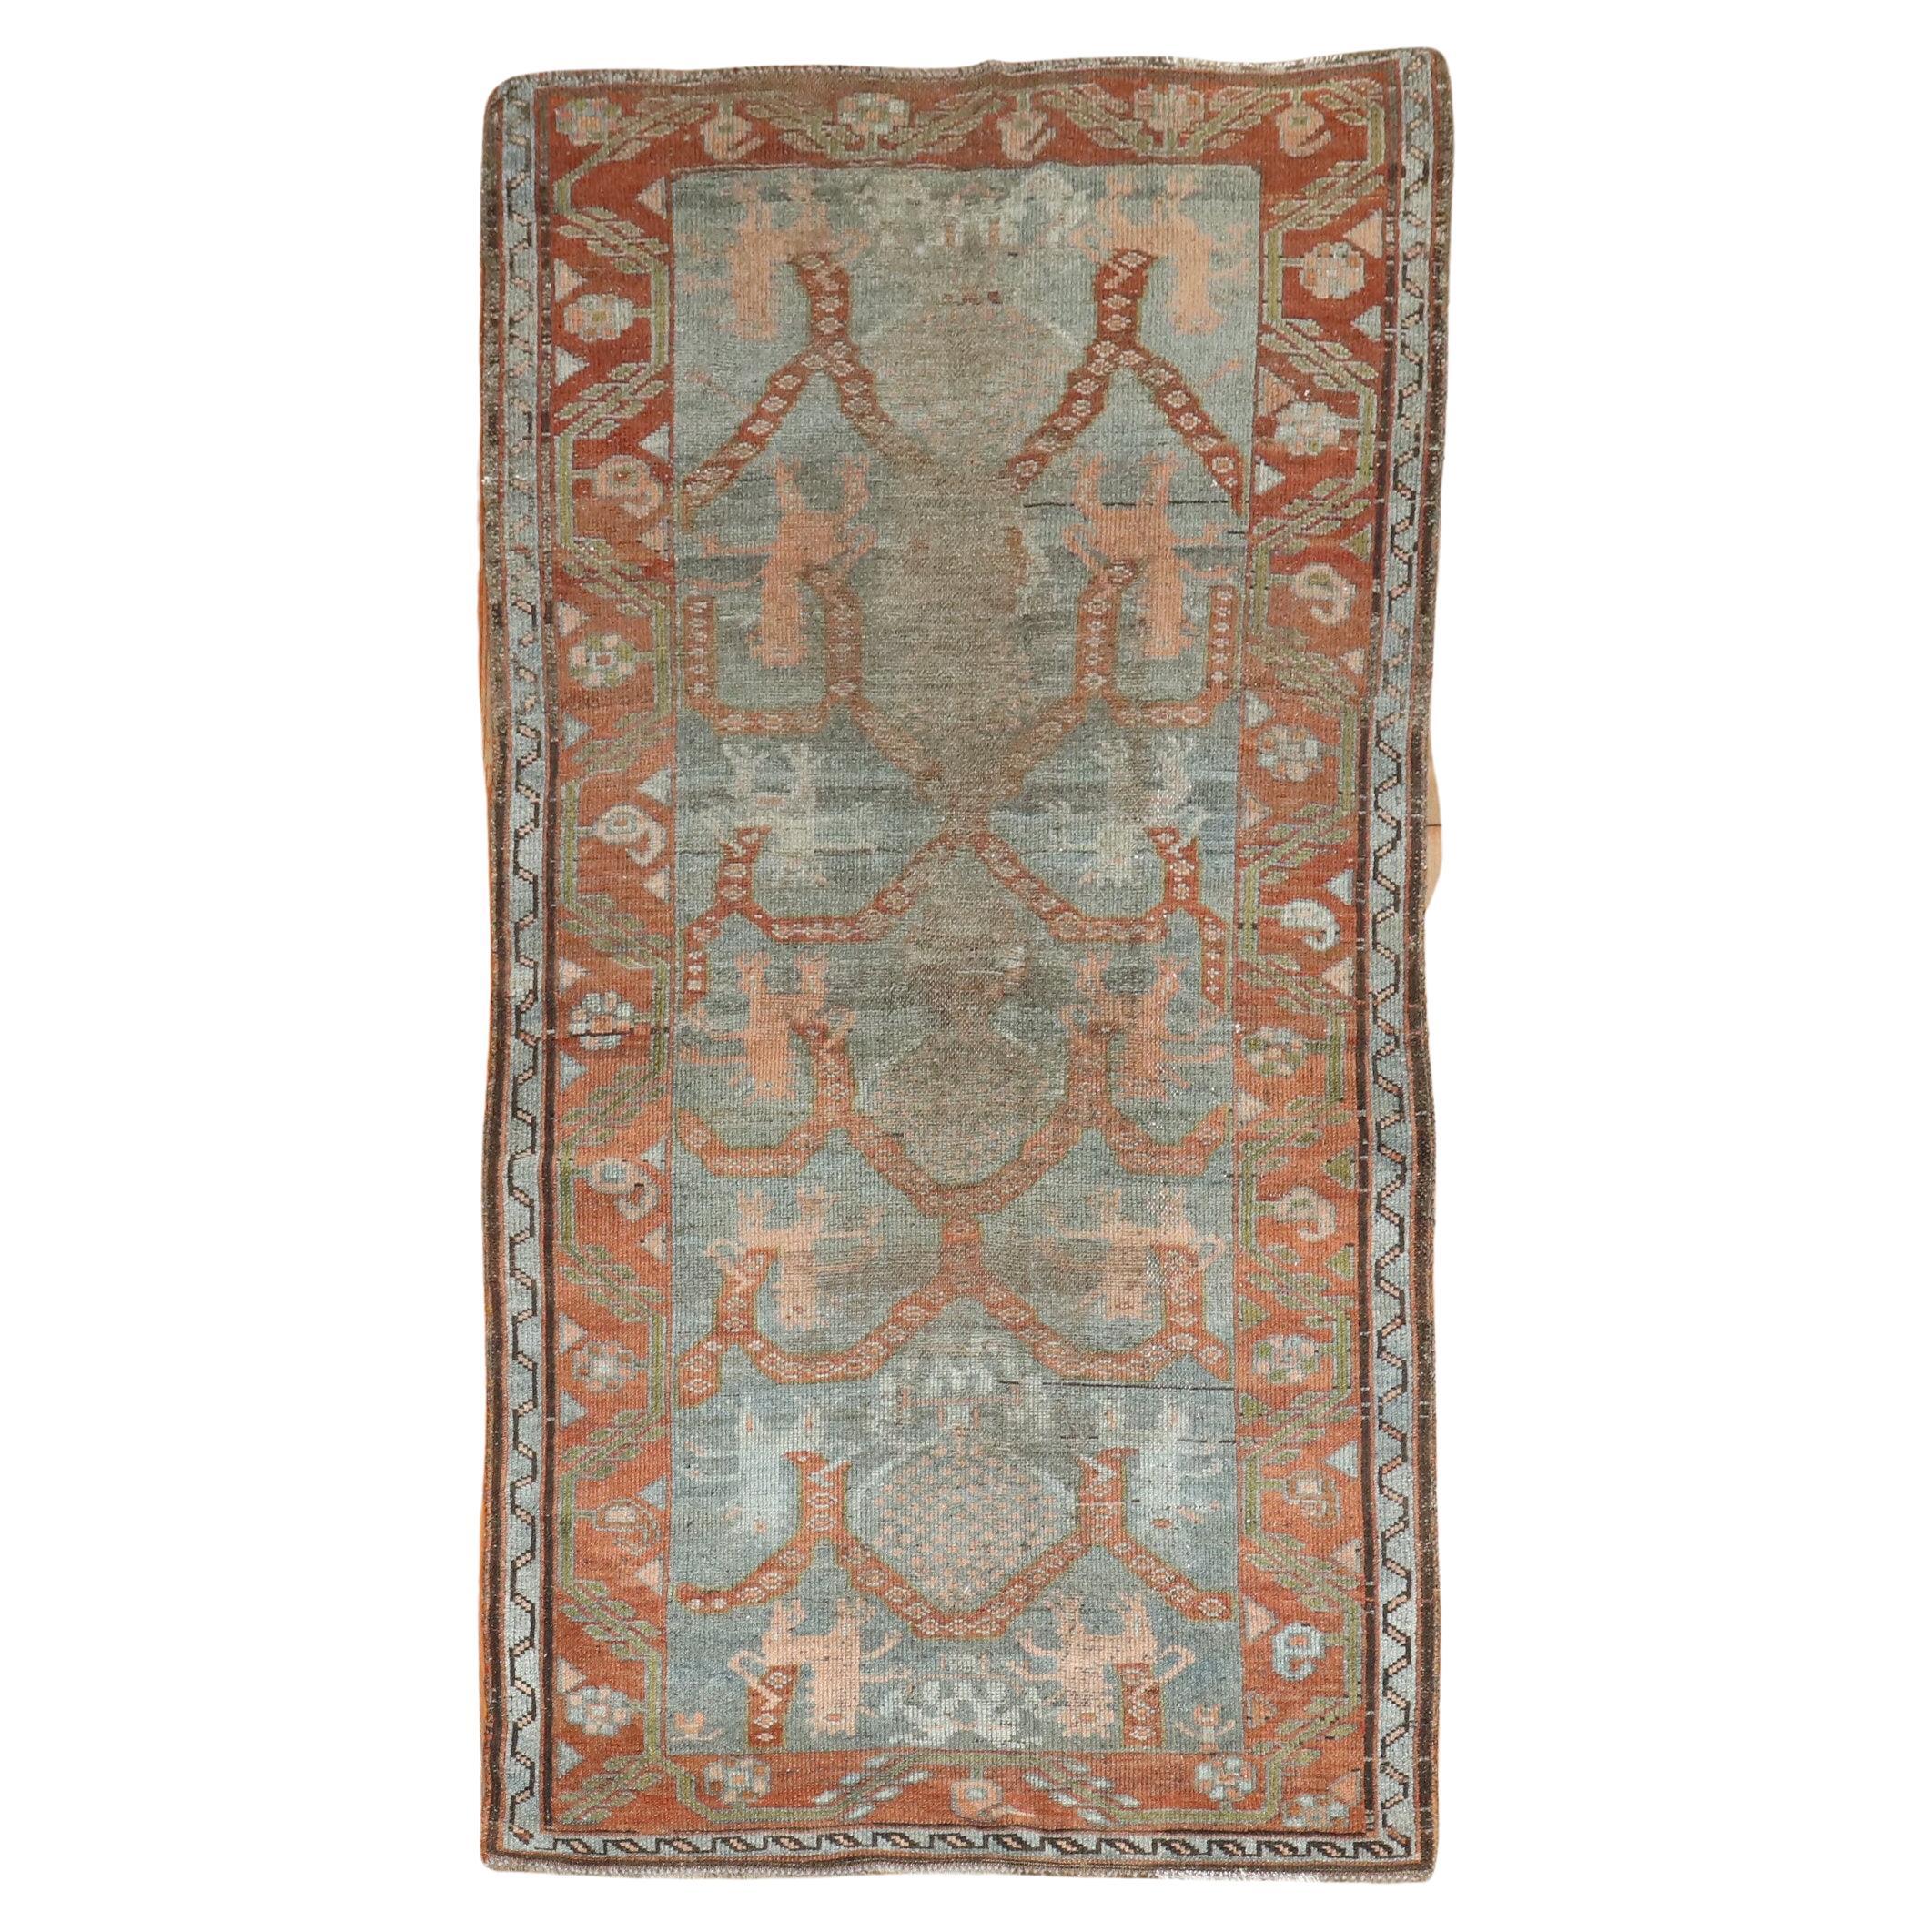 Antiker persischer Kurd-Löwen-Teppich aus der Zabihi-Kollektion